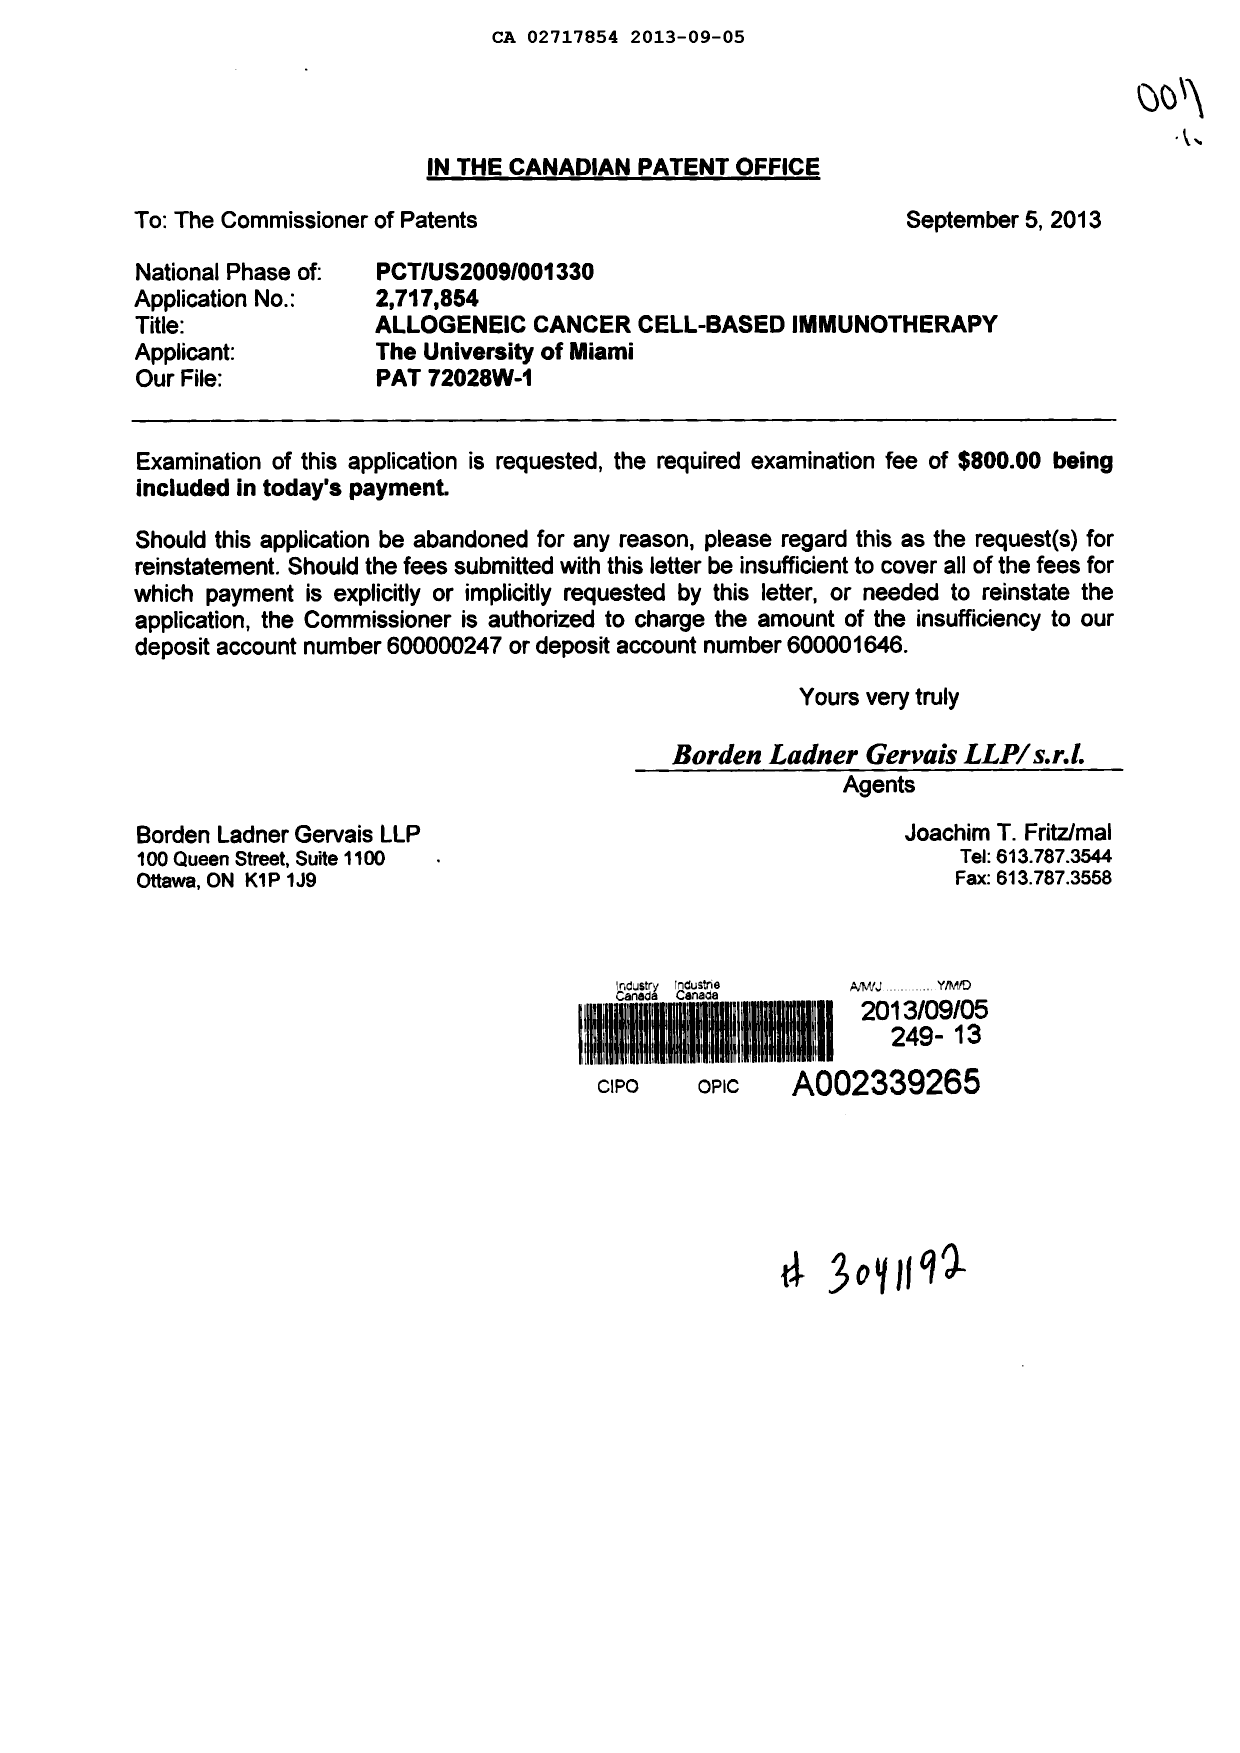 Canadian Patent Document 2717854. Prosecution-Amendment 20130905. Image 1 of 1